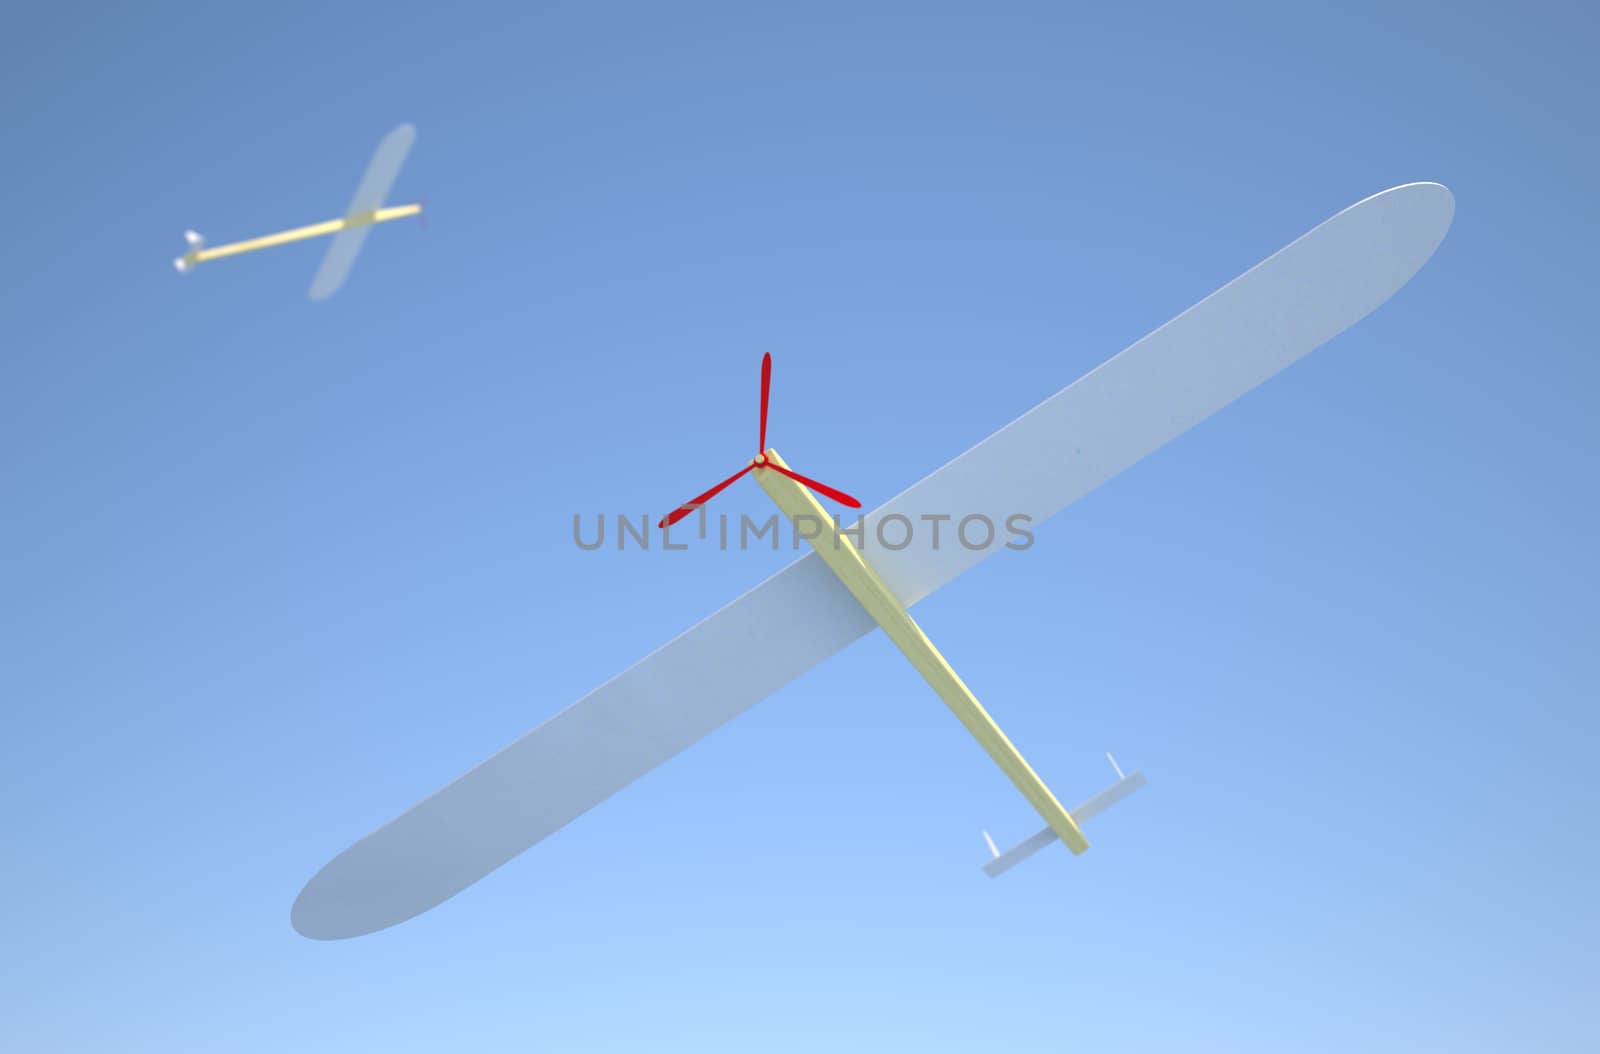 A wooden plane flying against a blue sky. Detailed 3D render.